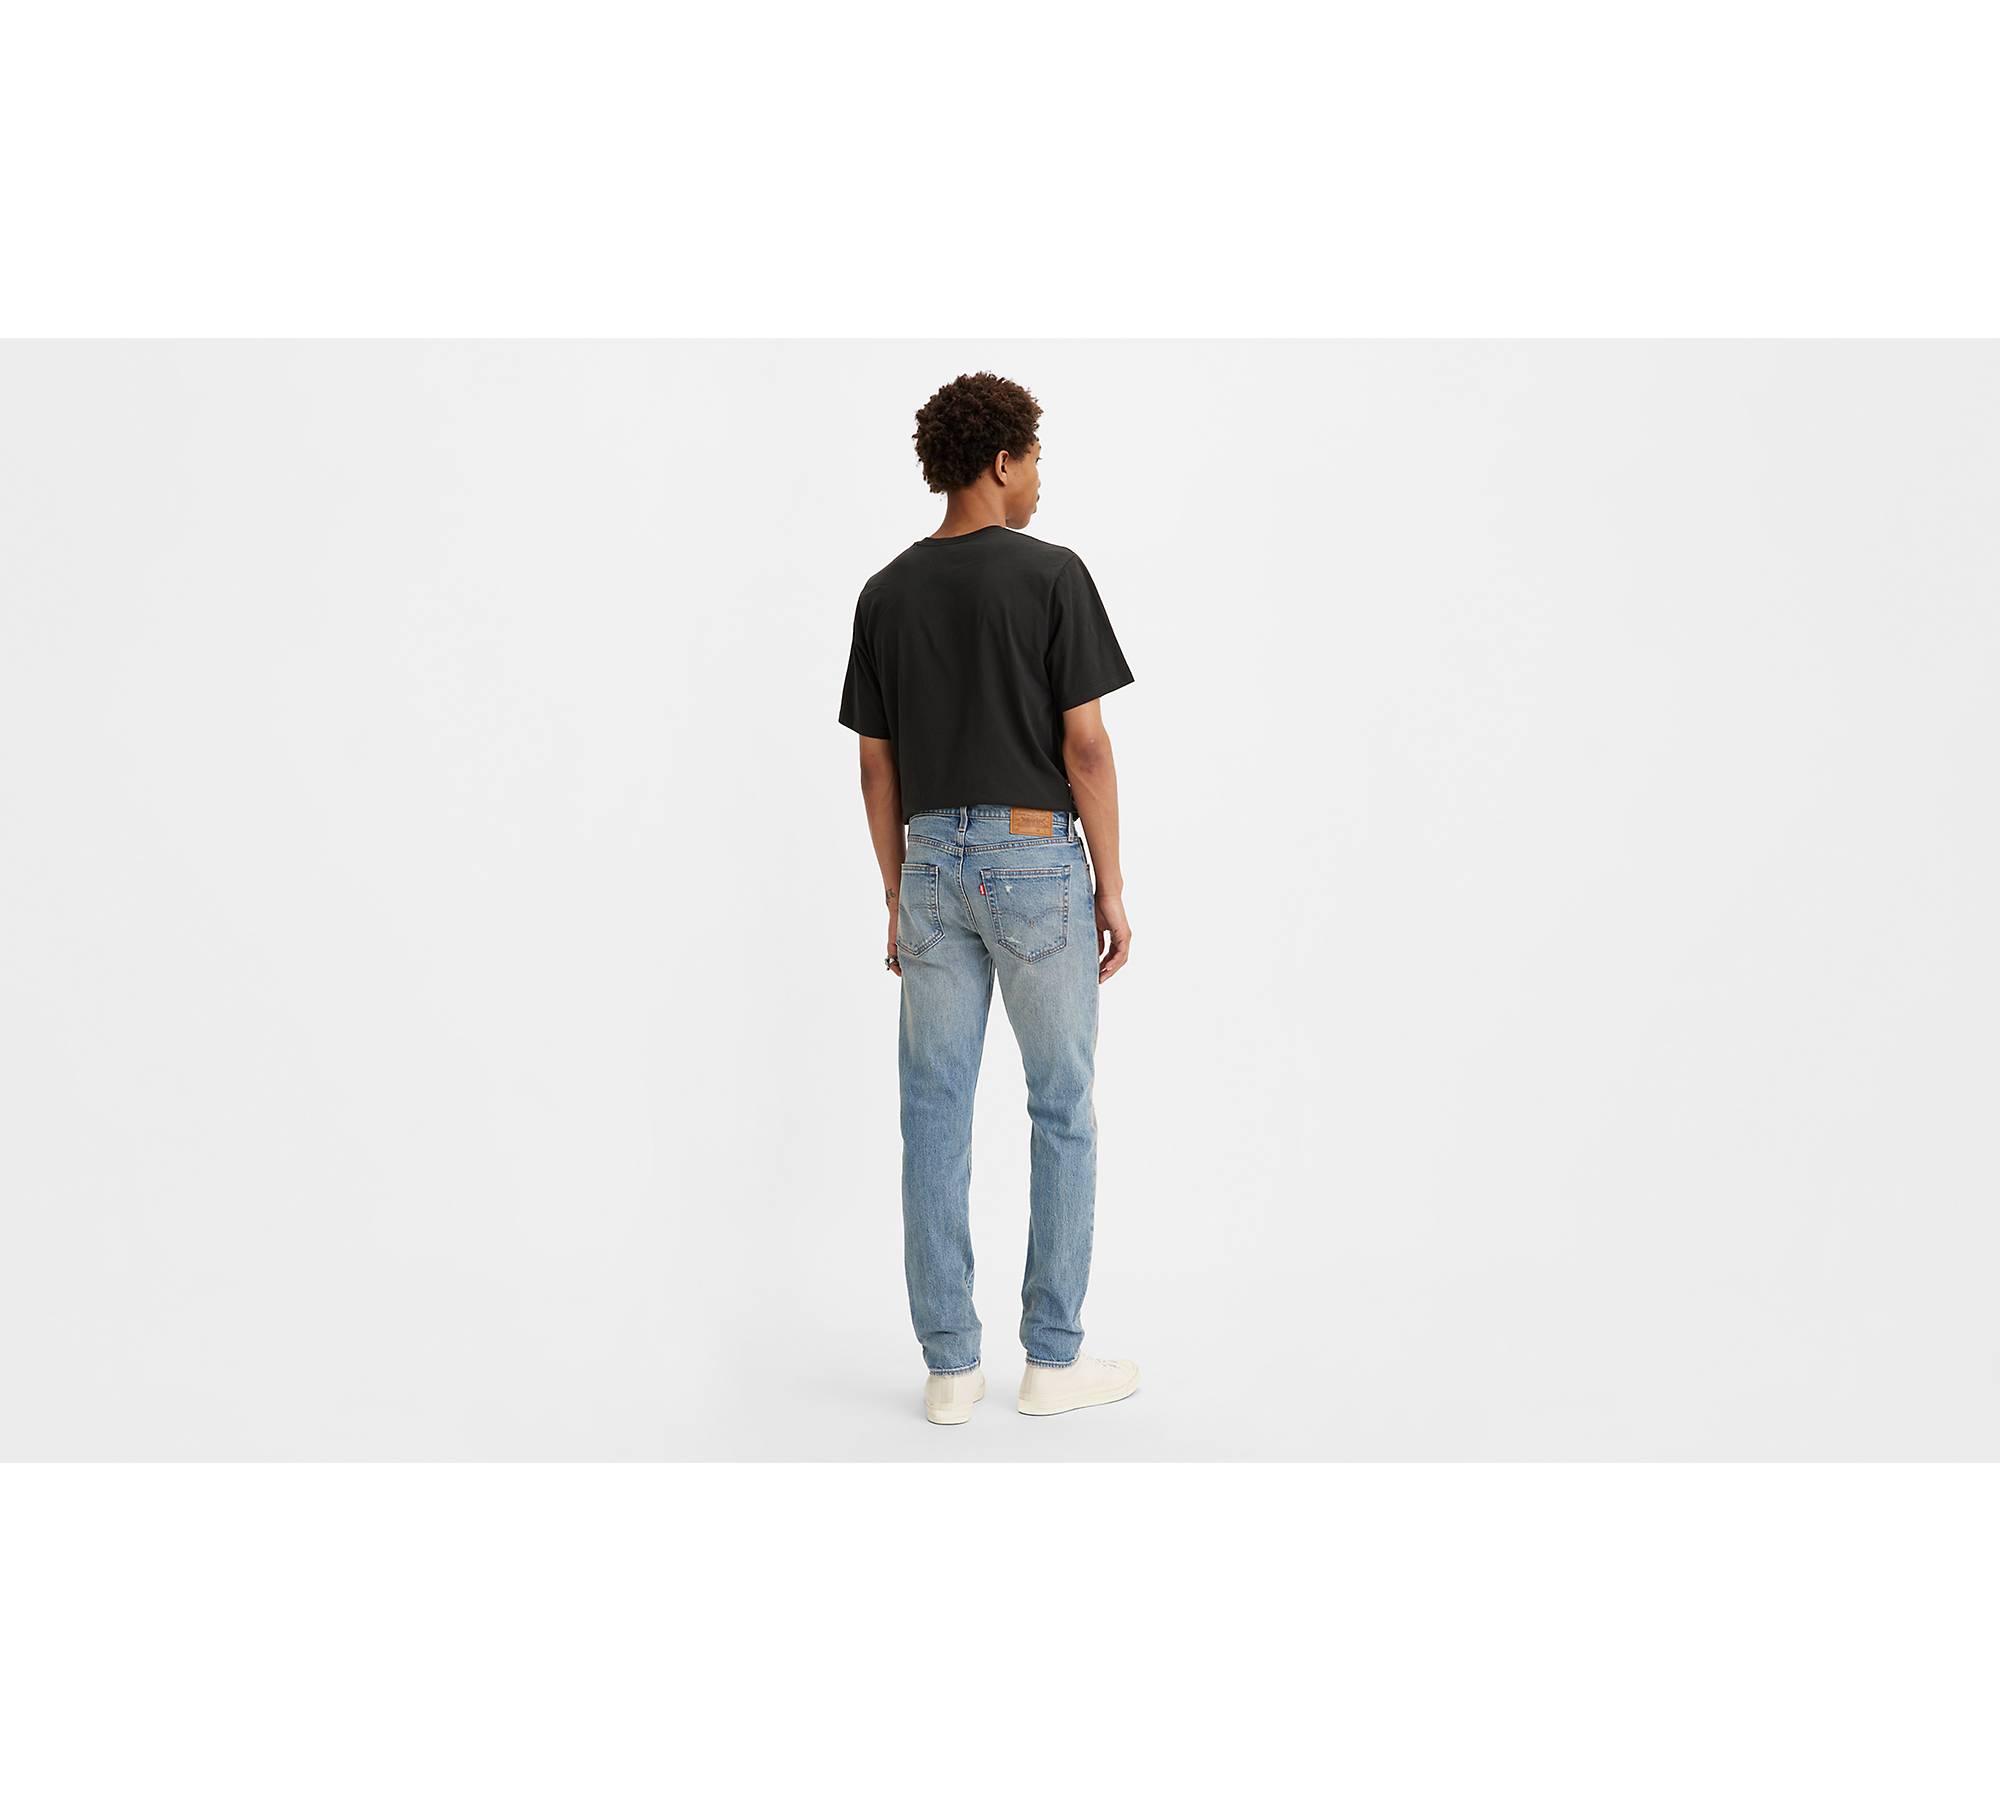 Buy Levi's Levi's 512 Slim Taper Fit Jeans Men 28833-0118 Online